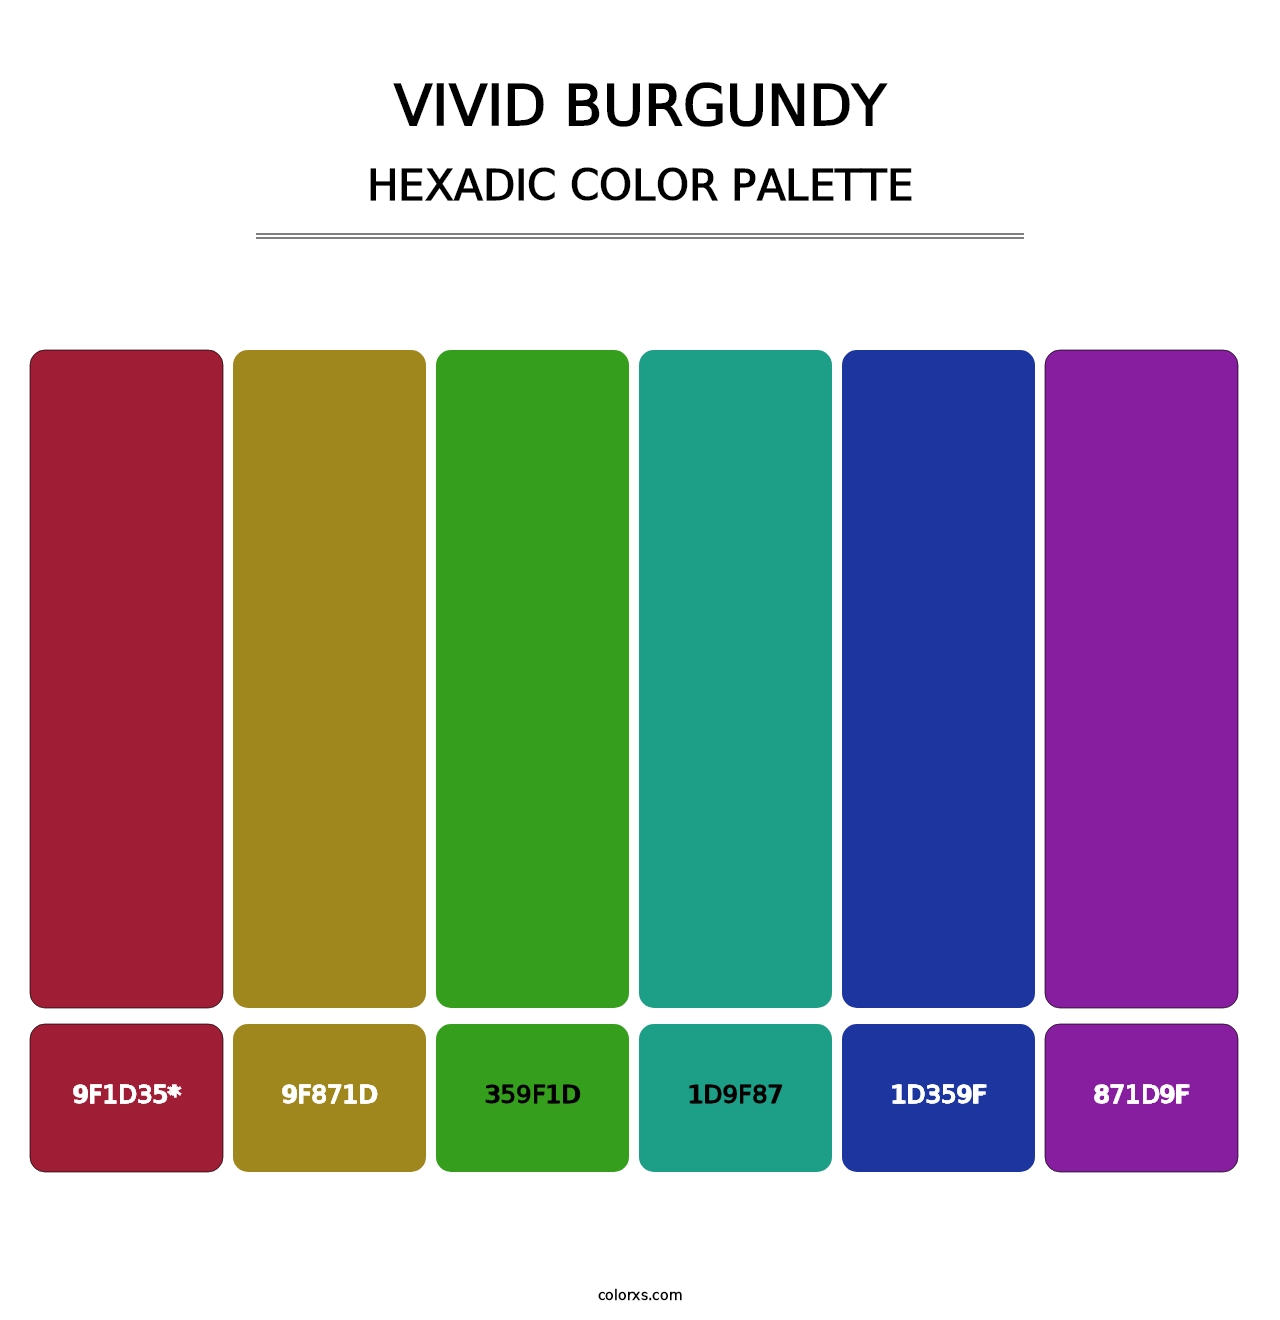 Vivid Burgundy - Hexadic Color Palette